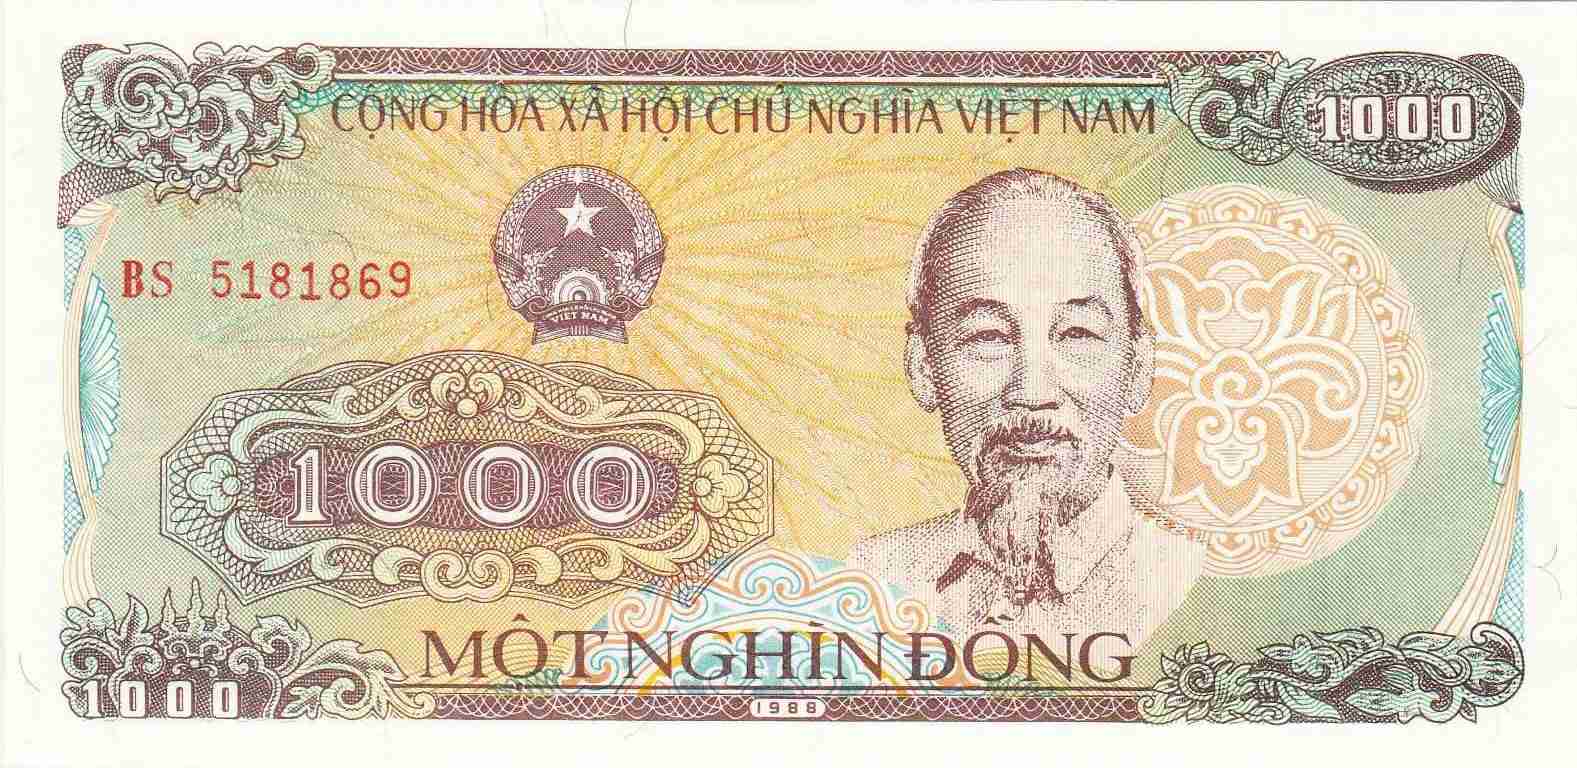 Viet Nam State Bank of Viet Nam 1000 Dong 1988 2 (2).jpg